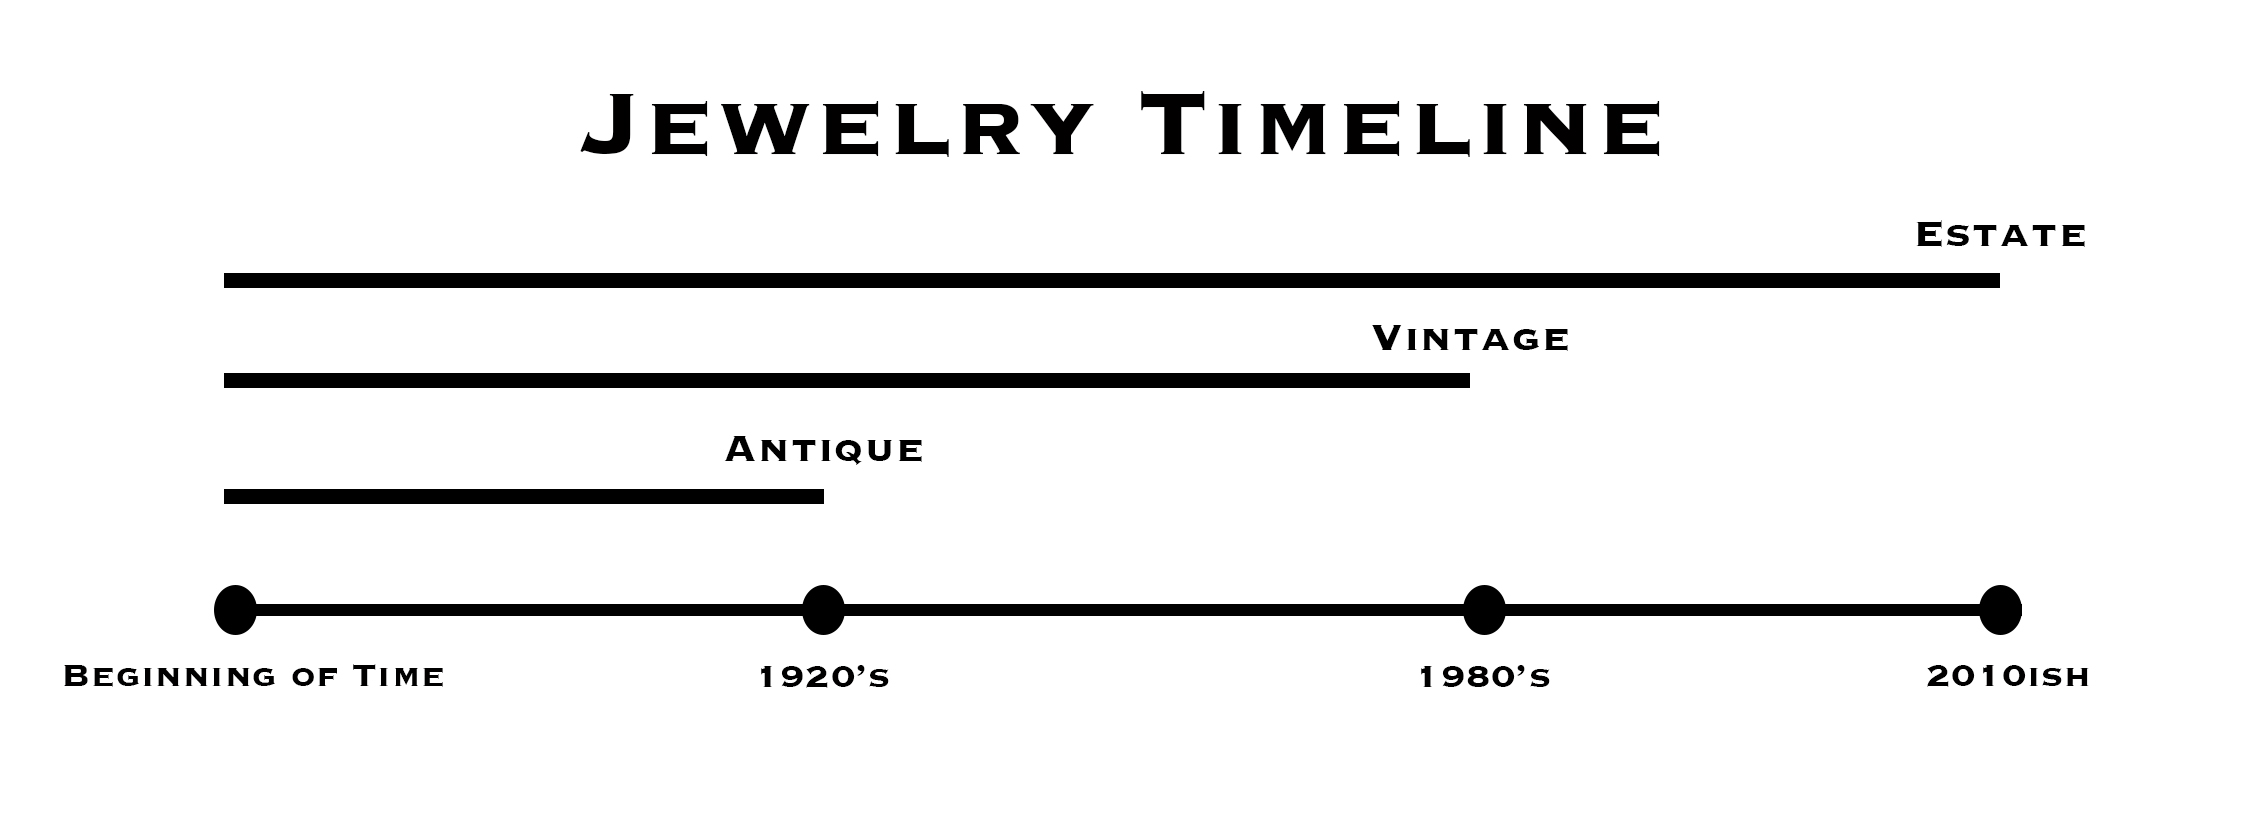 Antique Vintage and Estate Jewelry Era Timeline